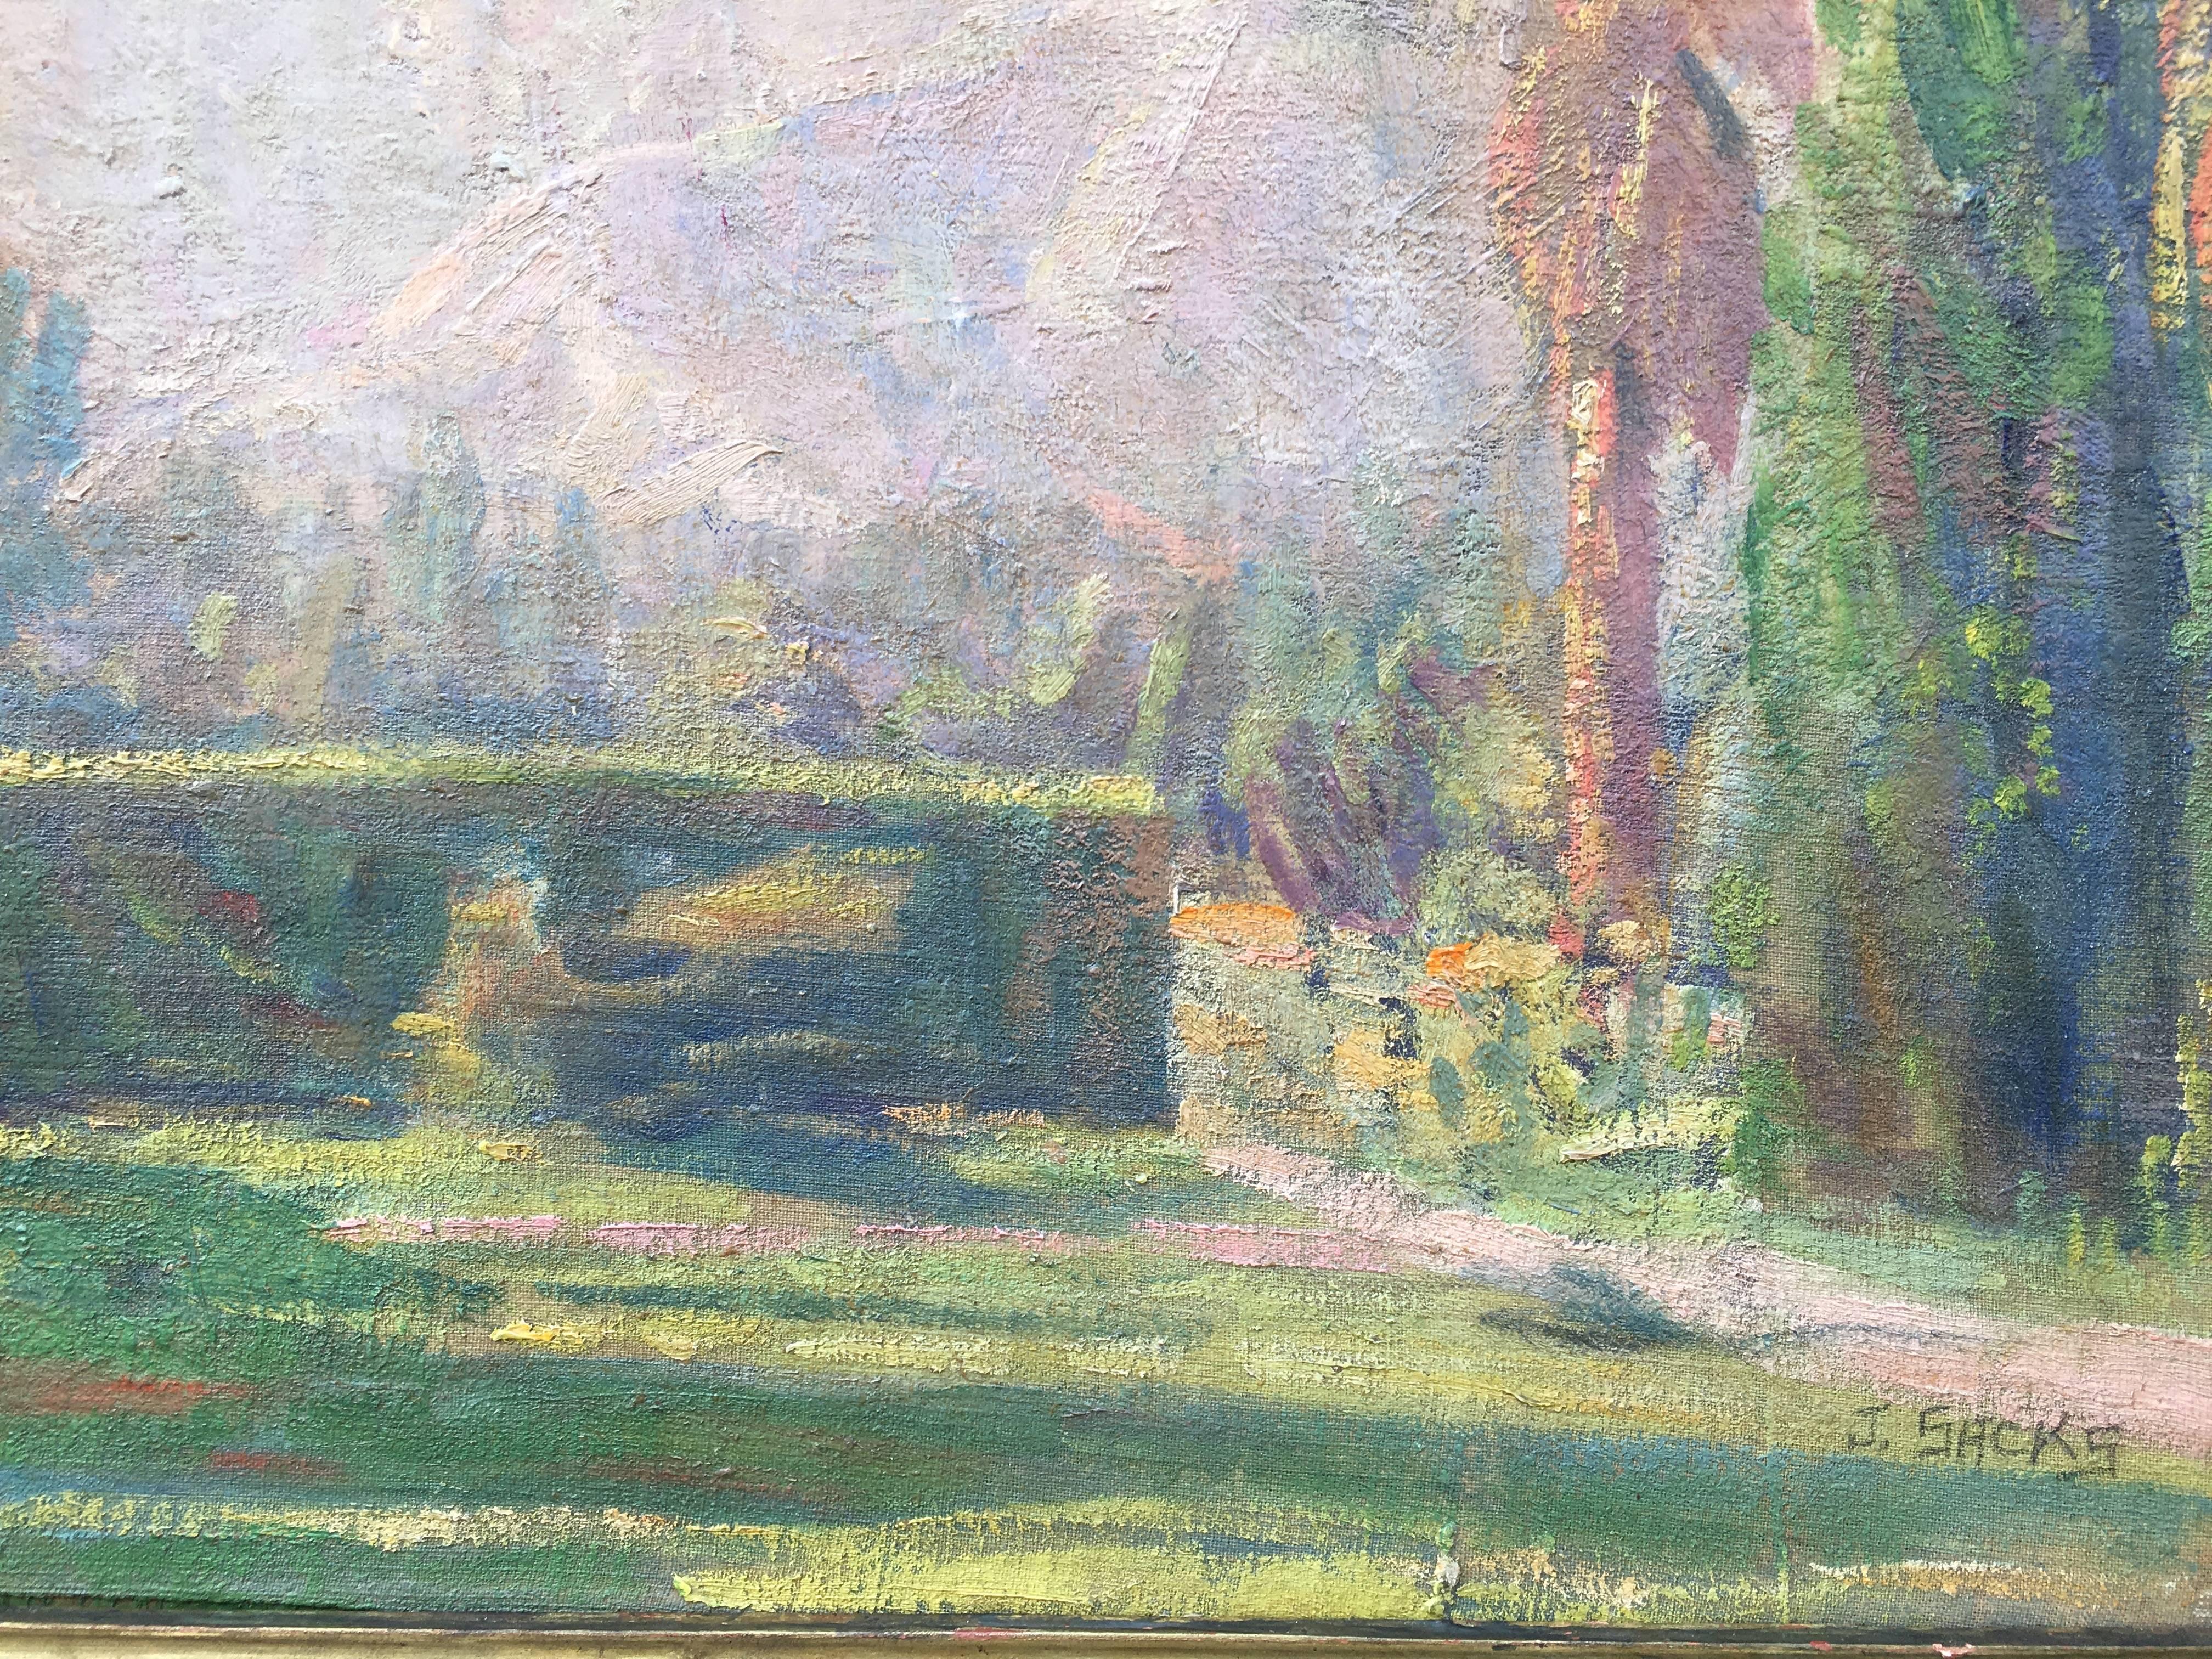 Impressionist Scene of Garden and Mt. Tamalpais in Marin County, California - Painting by Joseph Sacks